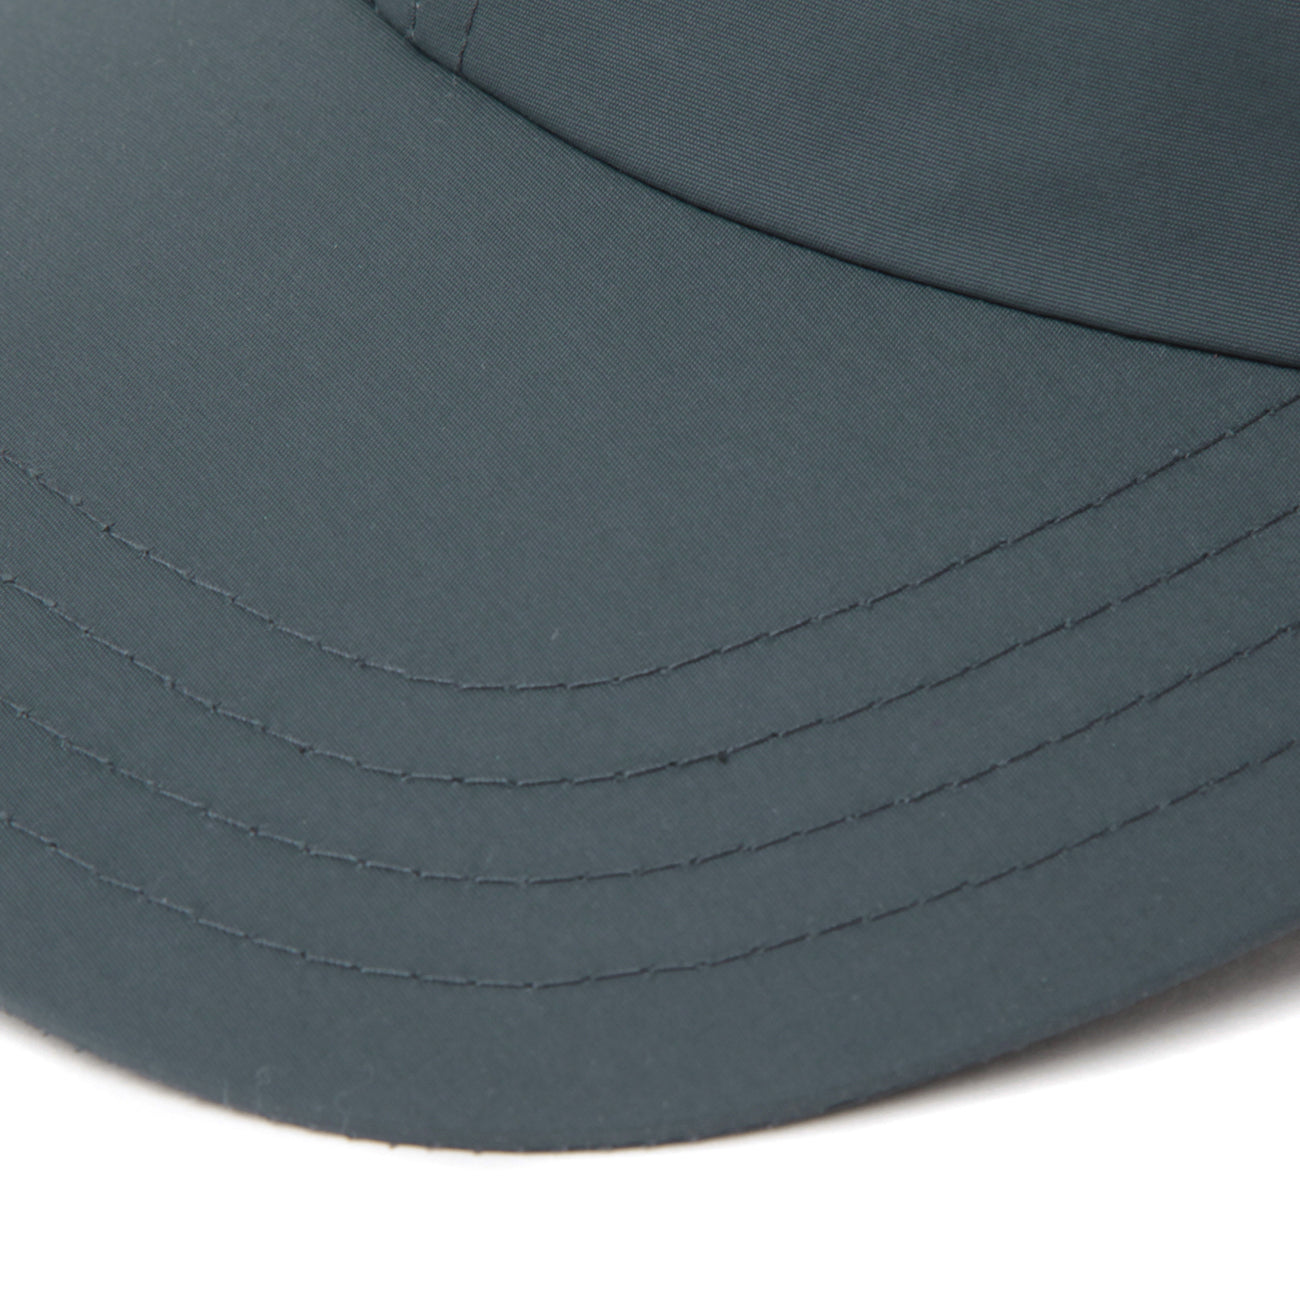 KED CAP (BOARD) - CHARCOAL